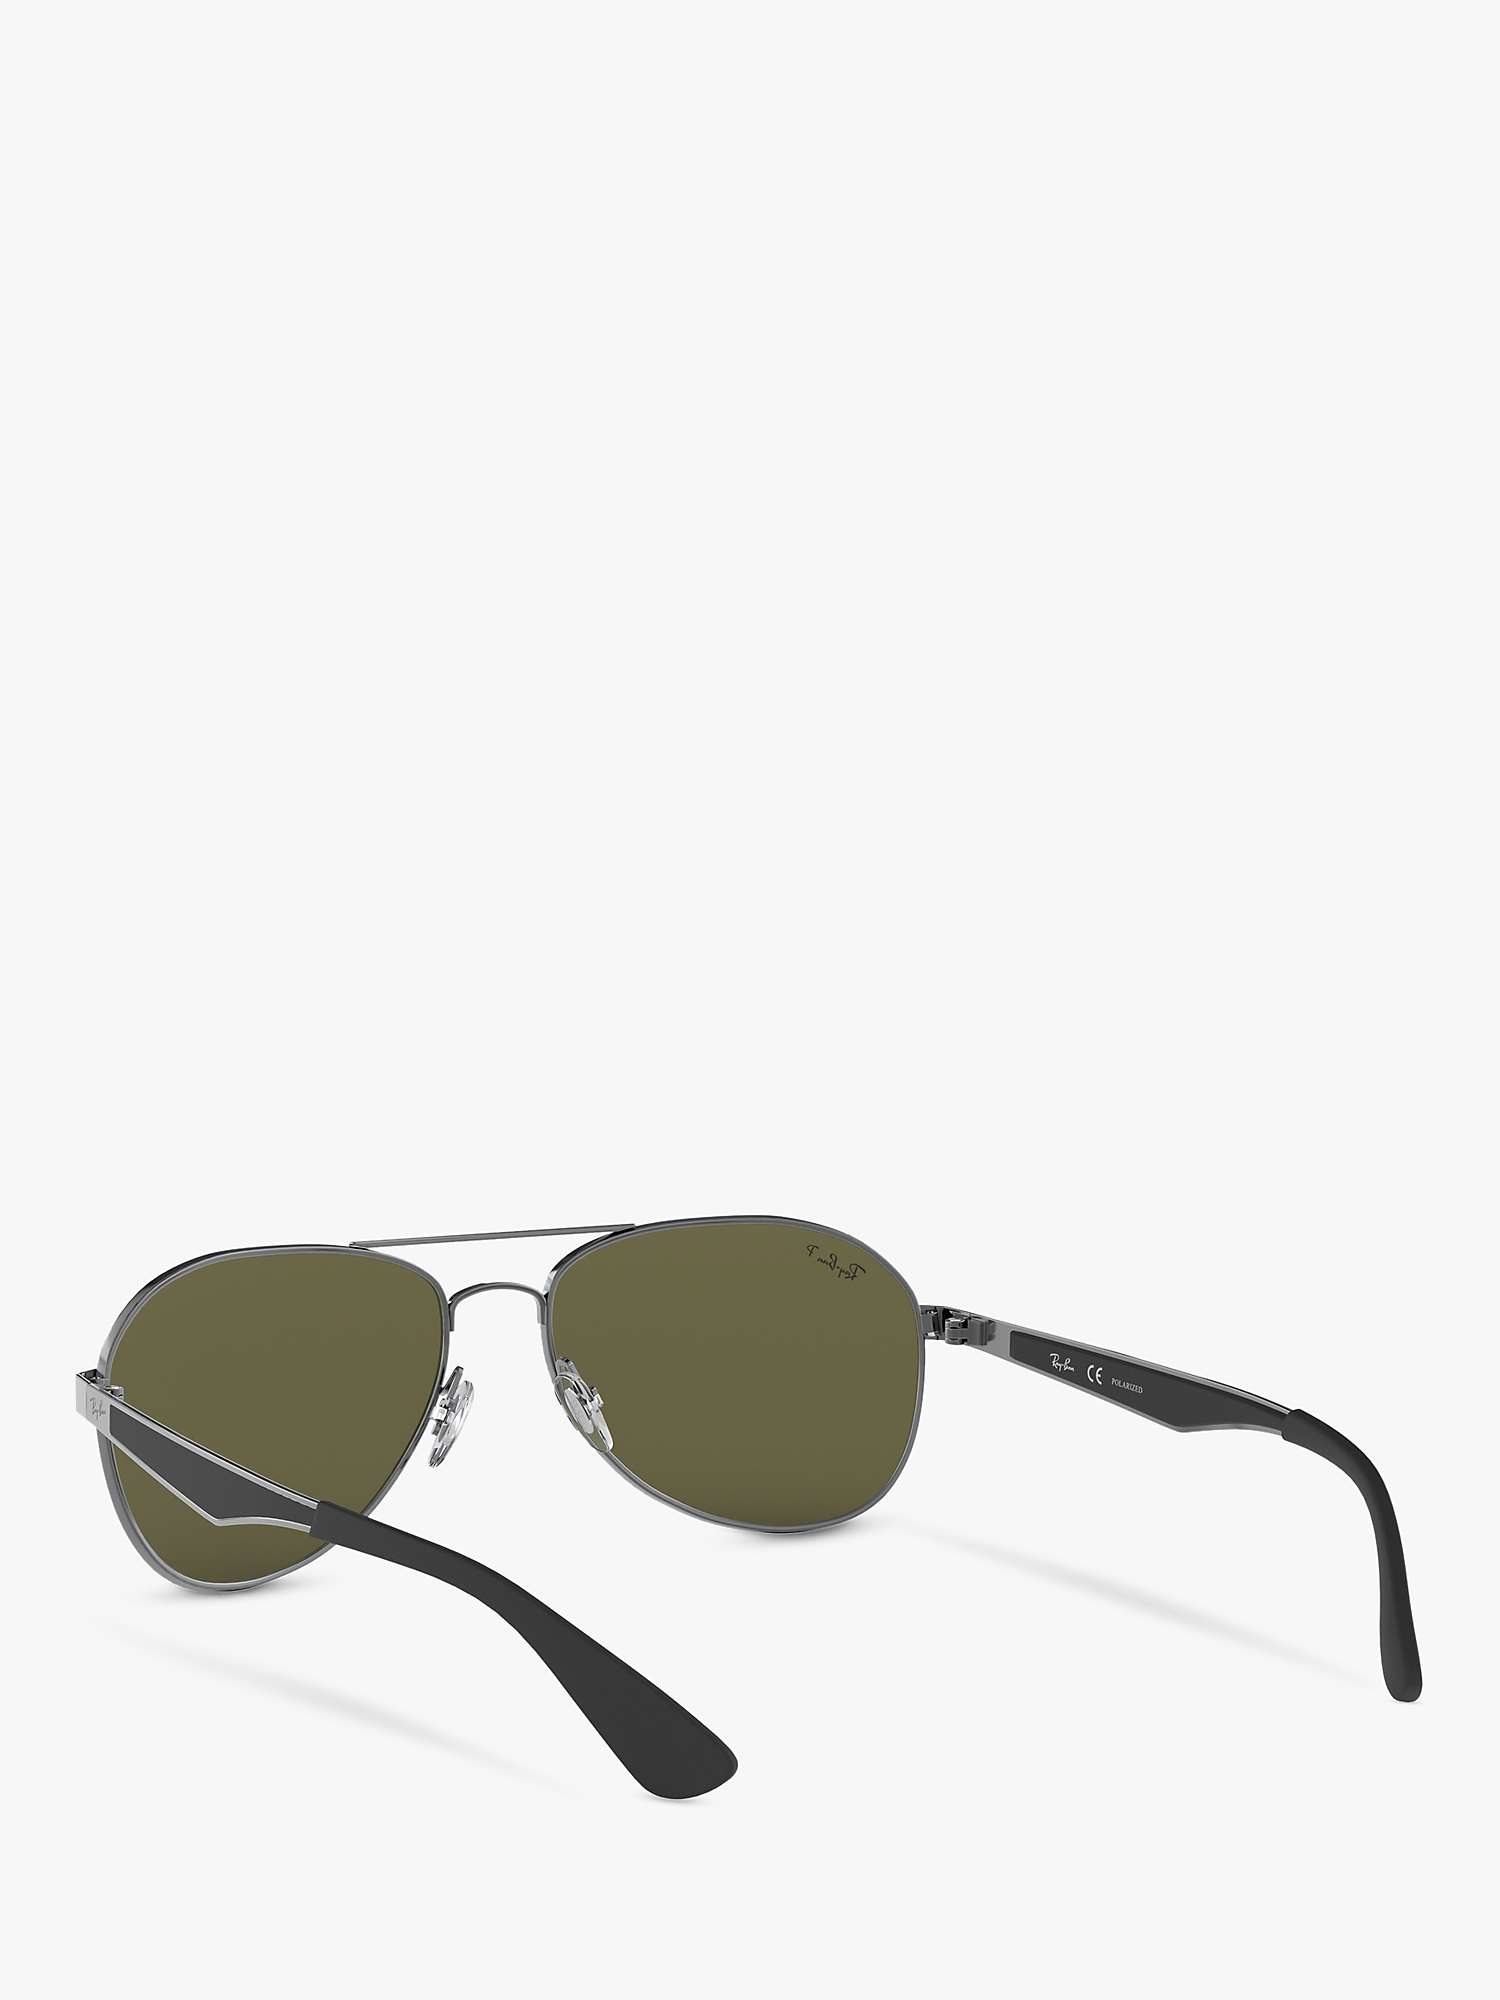 Buy Ray-Ban RB3549 Men's Polarised Aviator Sunglasses, Gunmetal/Green Online at johnlewis.com